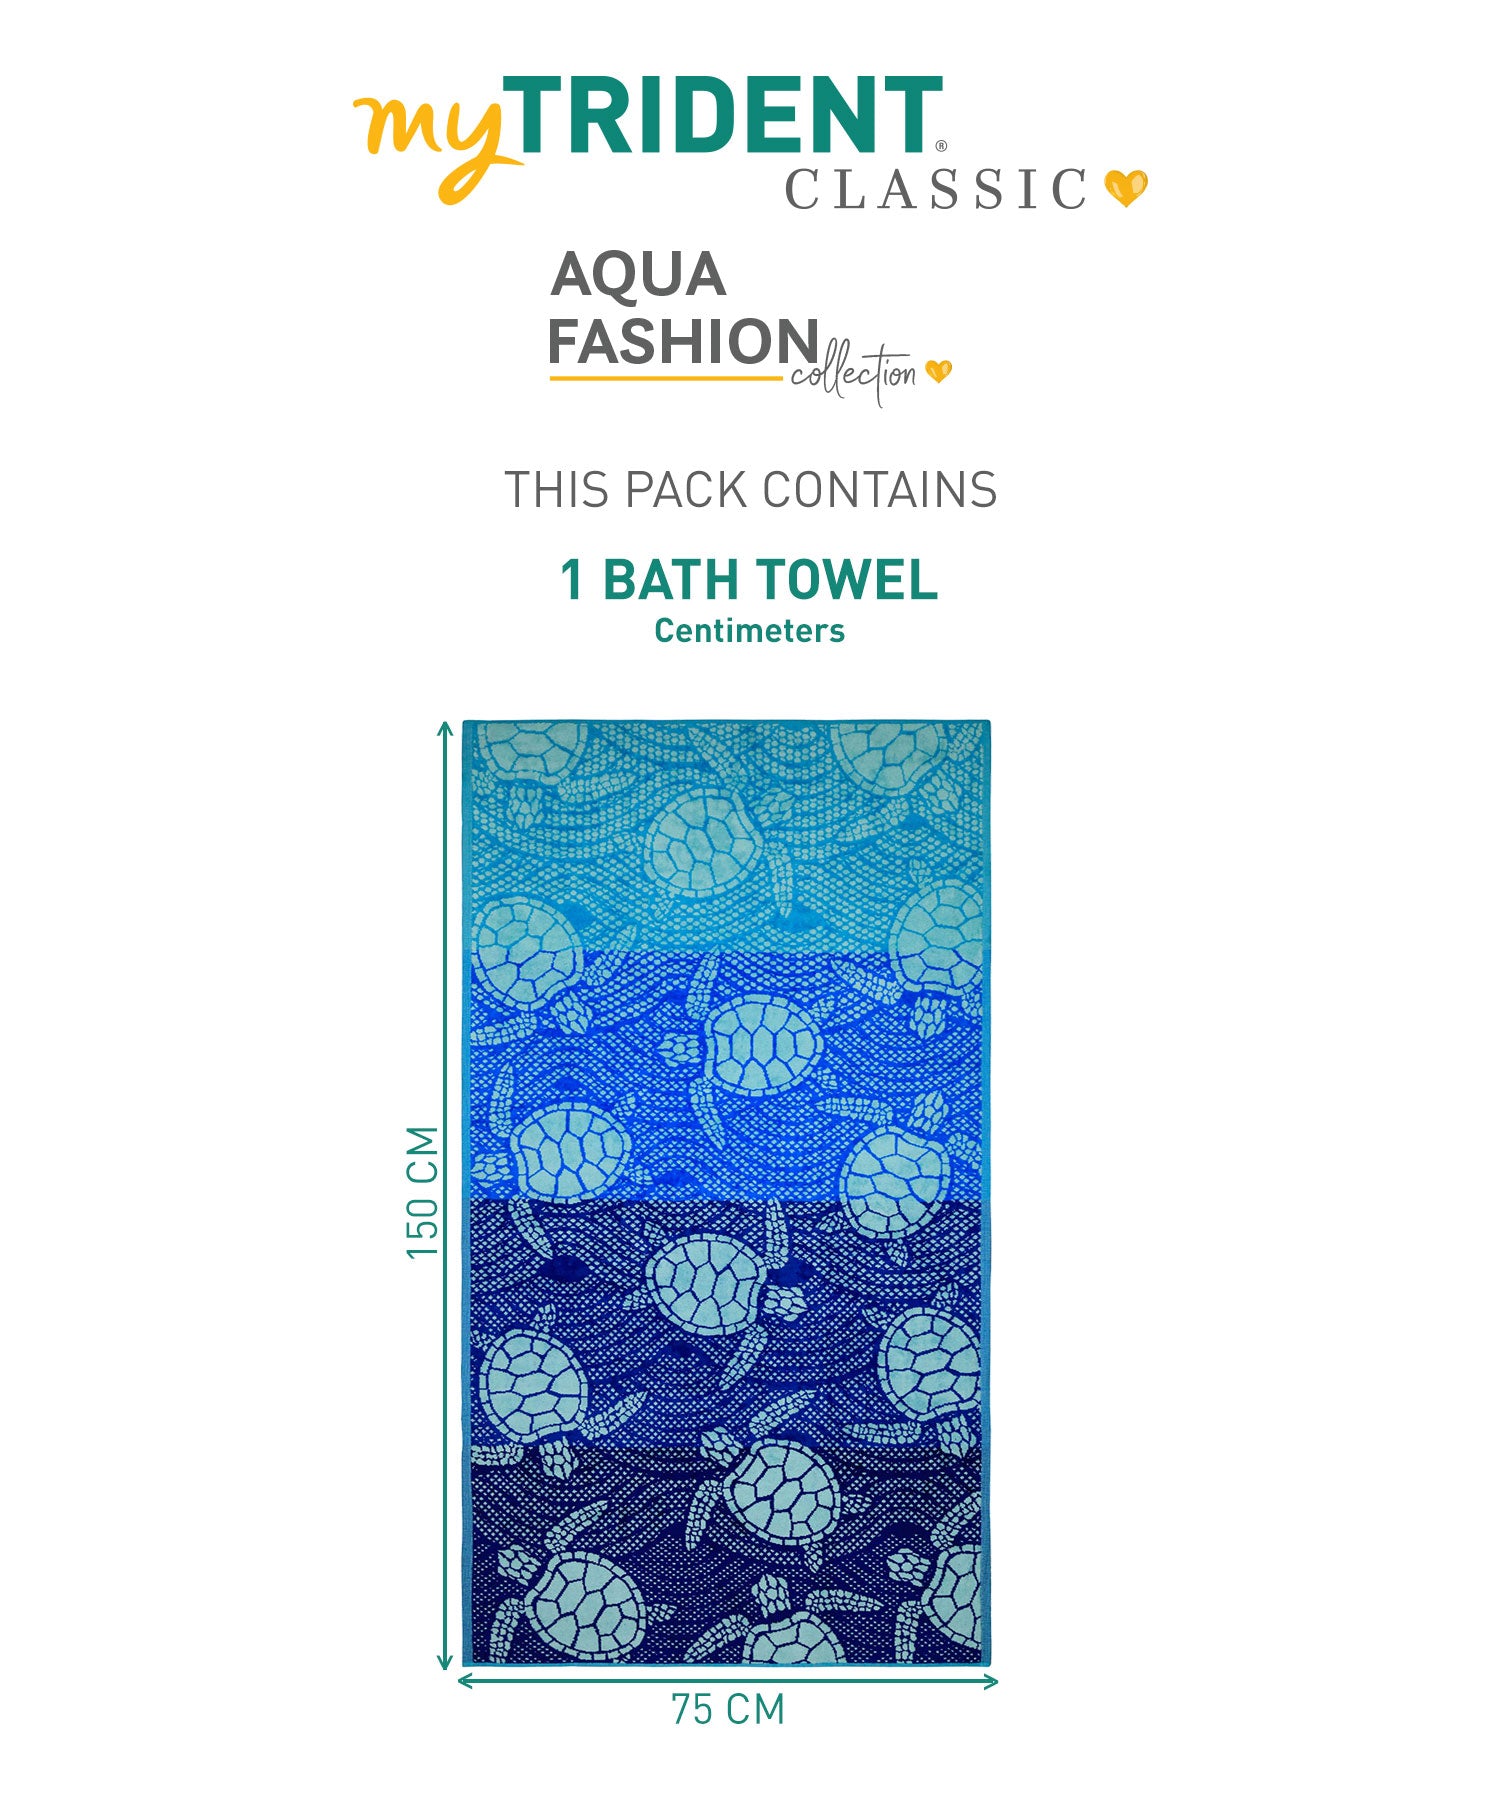 CLASSIC AQUA FASHION TOWEL,100% Premium Cotton,Sheared Velvet Touch, TURTLE SWIM